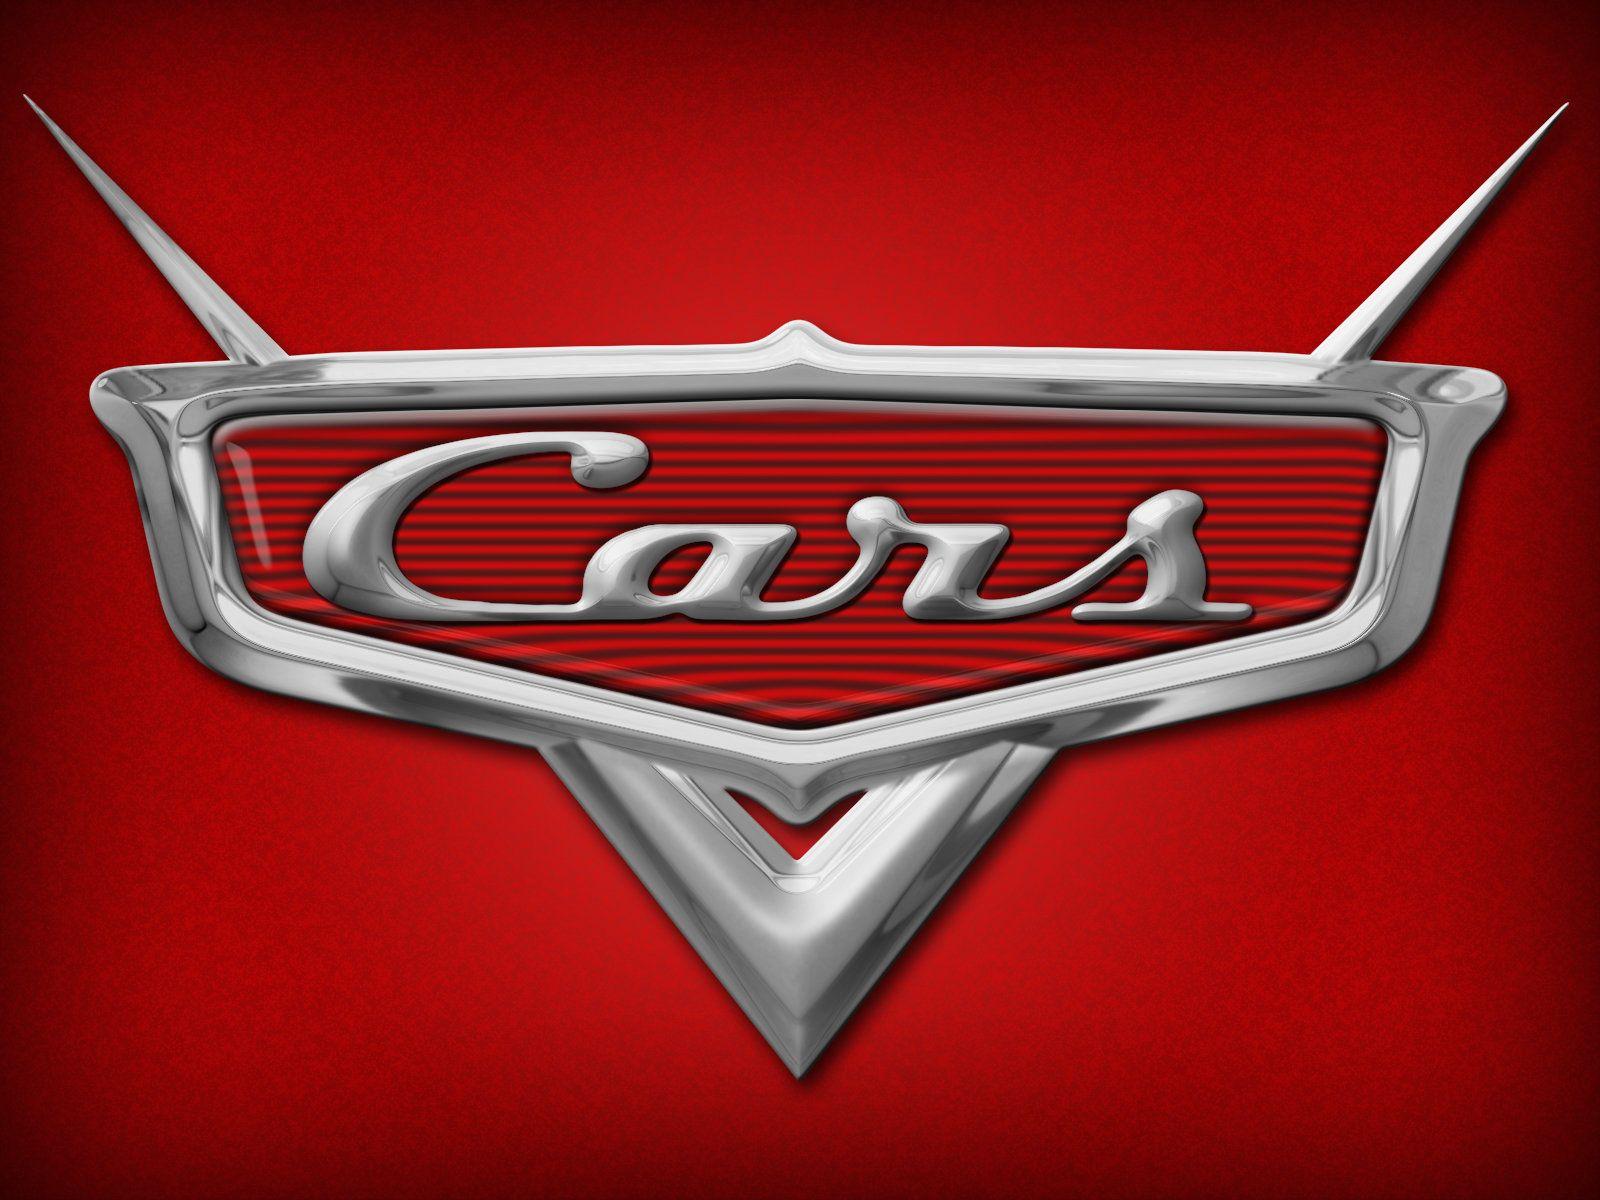 Disney Cars Logo - Cars Logo PSD by vicing on DeviantArt